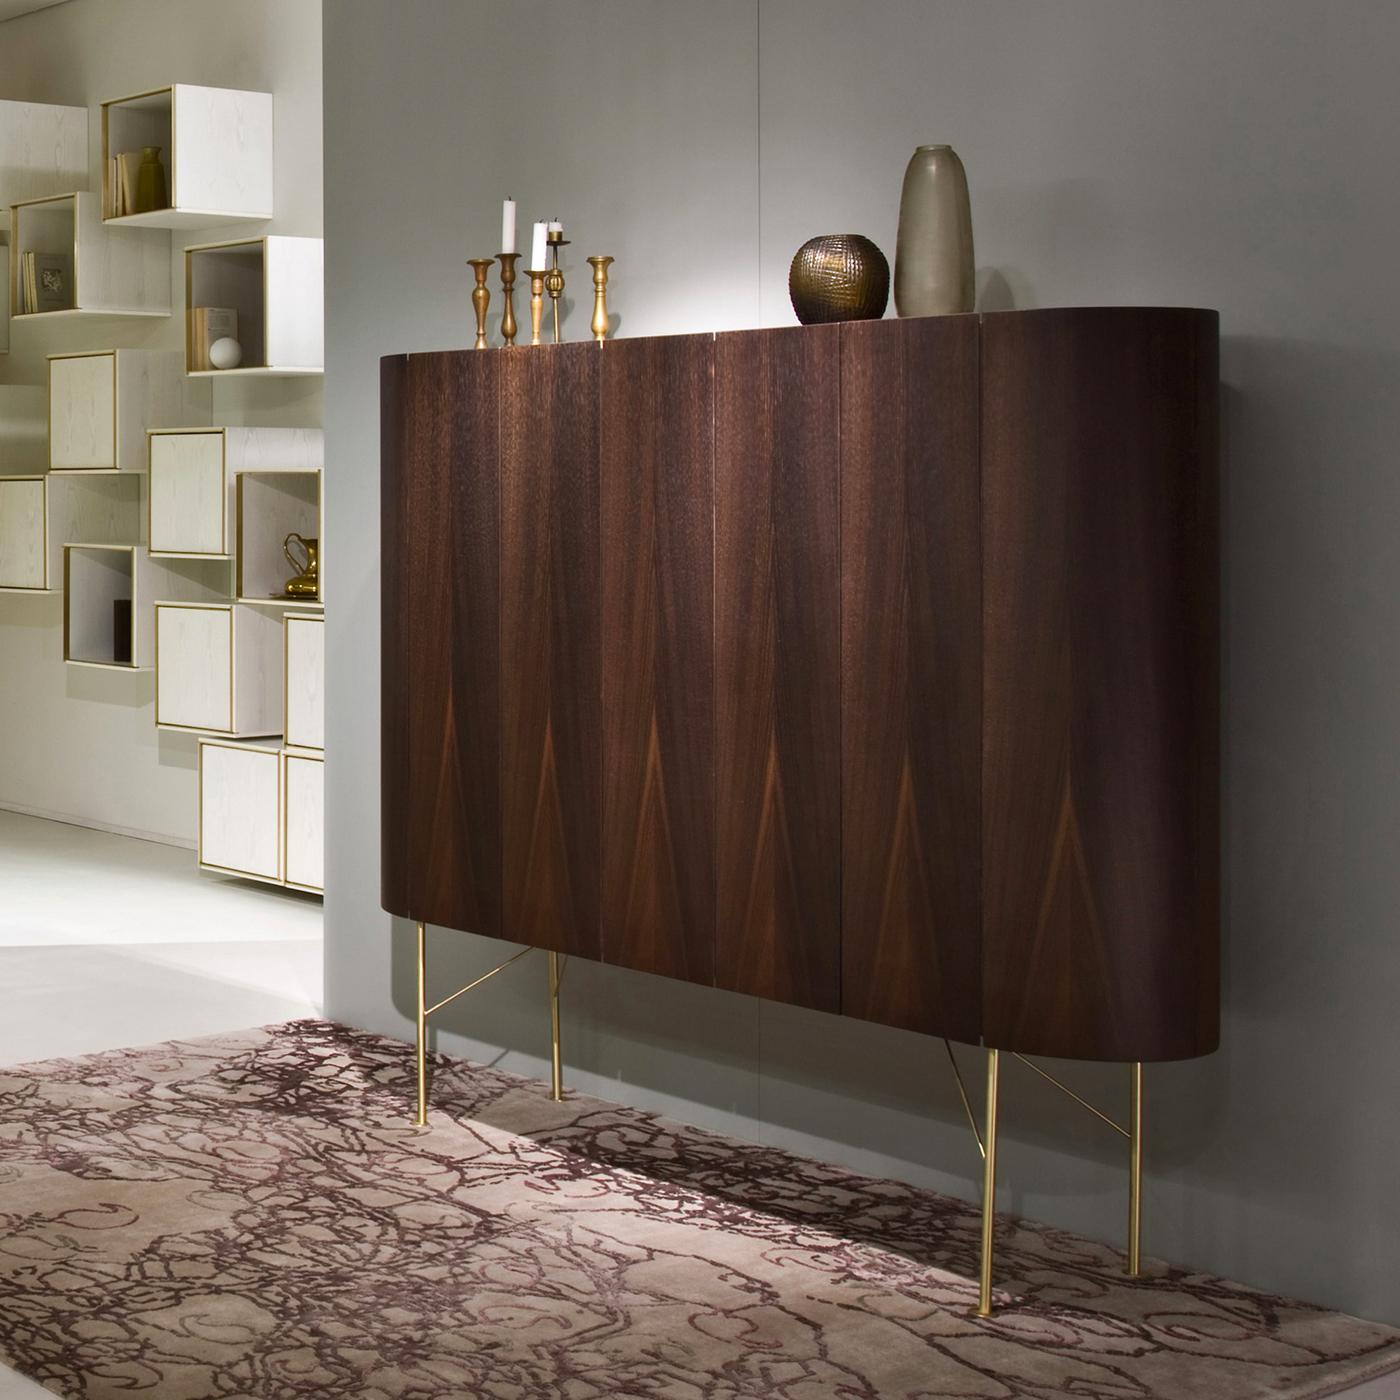 Italian Collection Cabinet by Bartoli Design